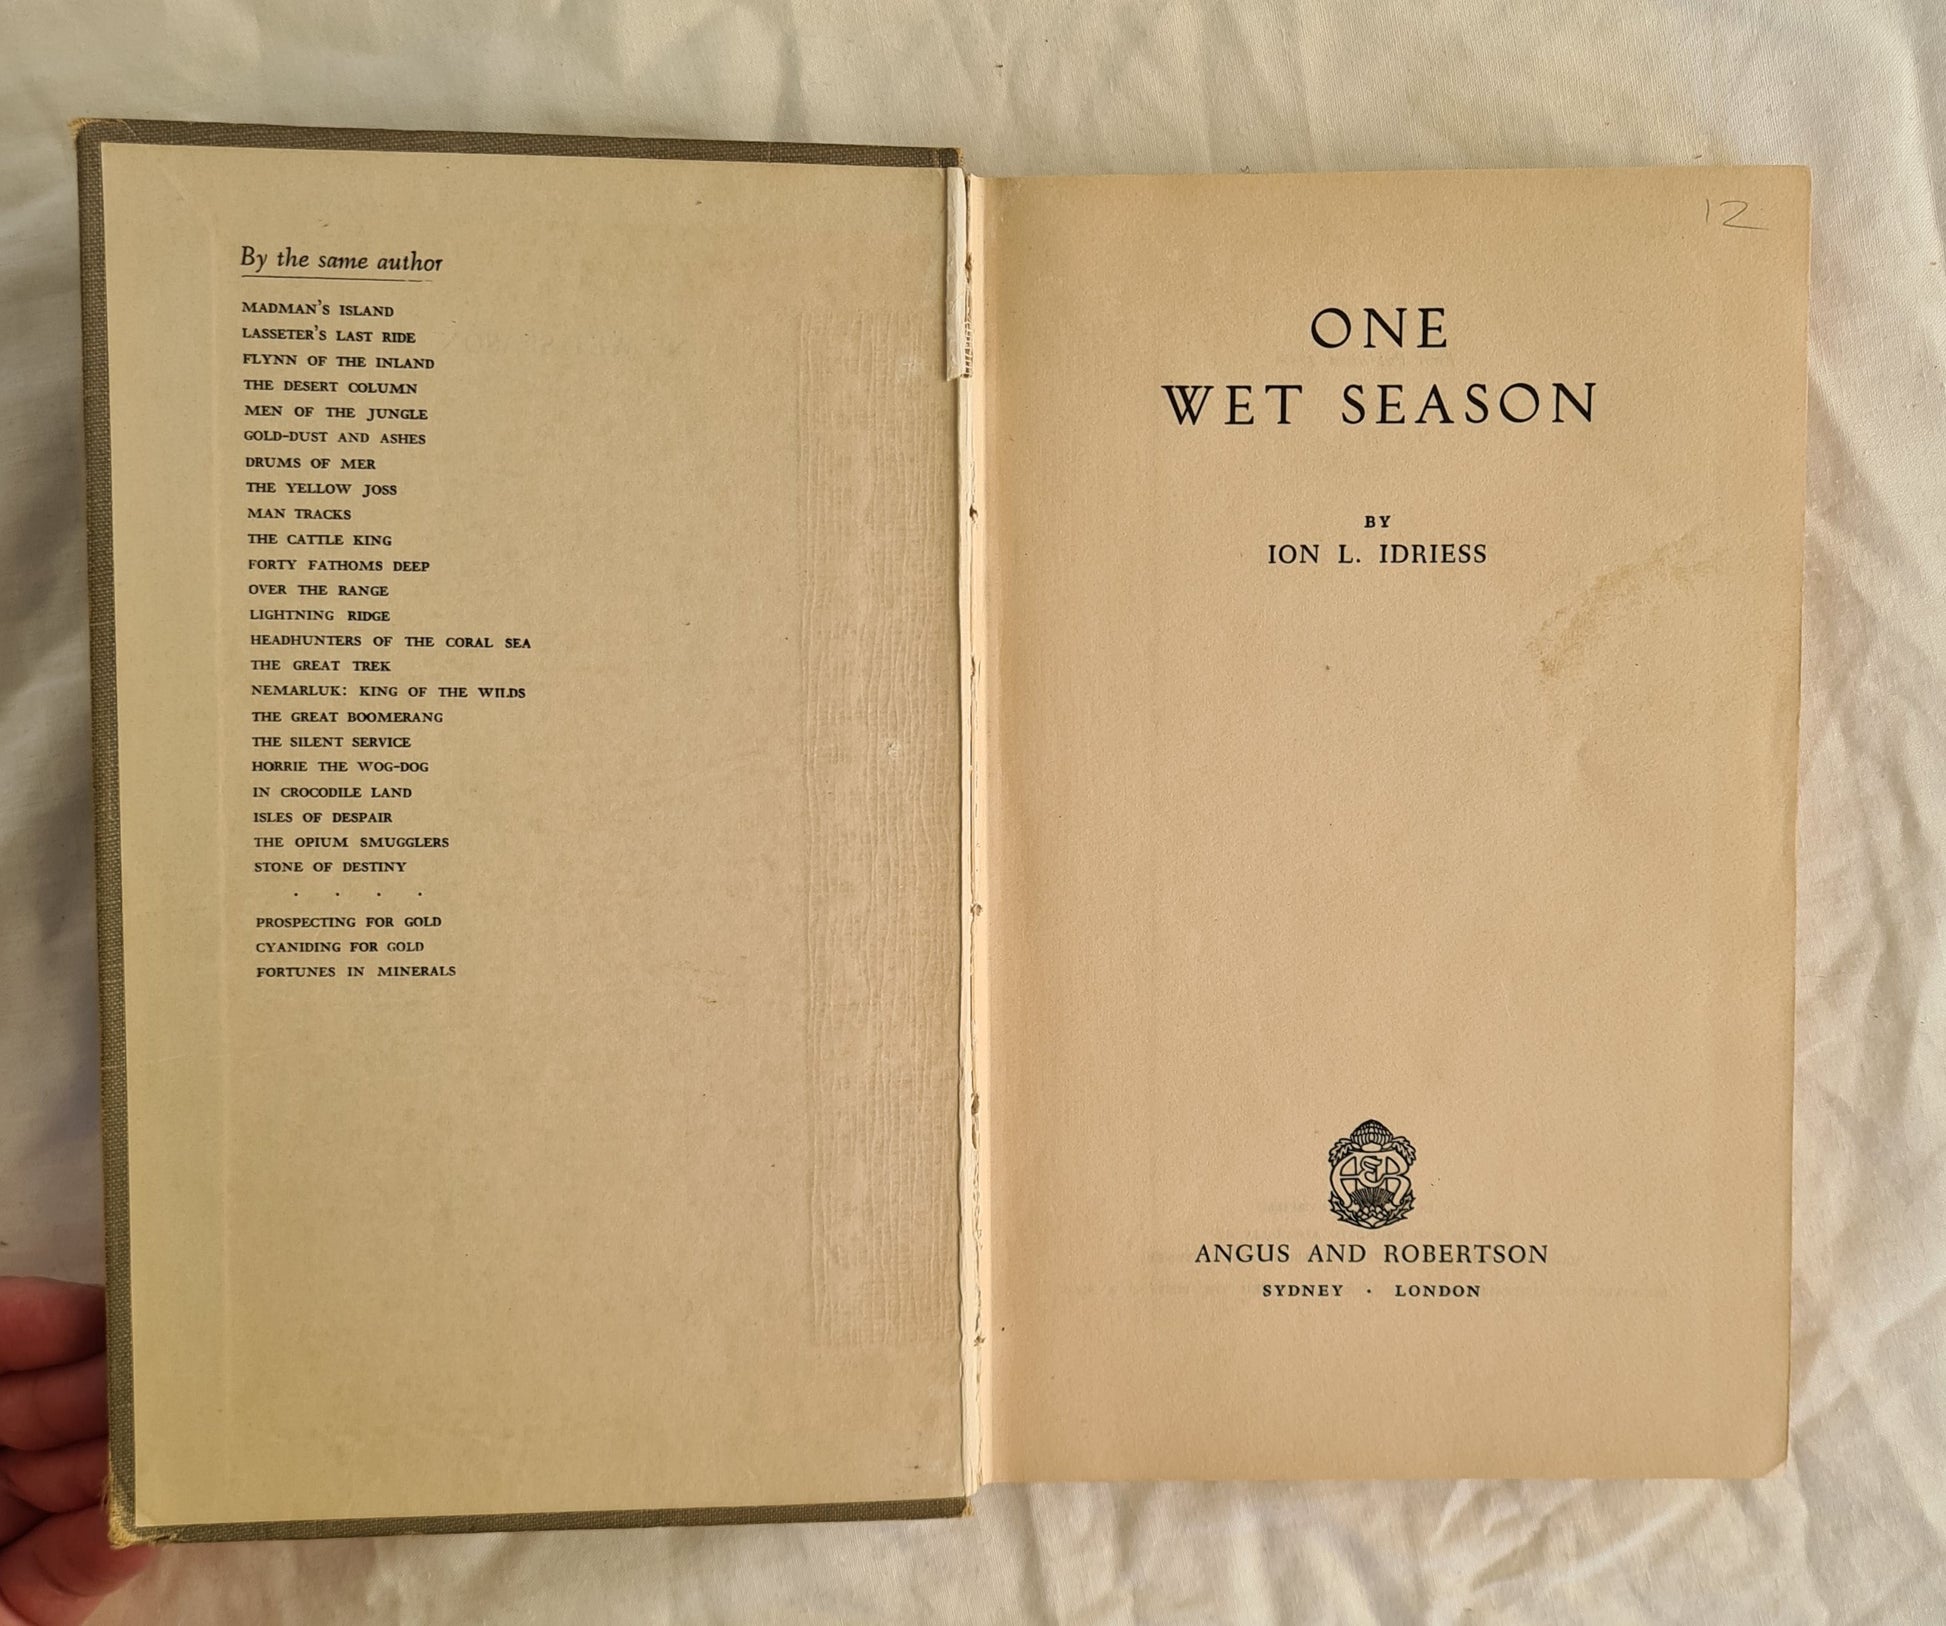 One Wet Season by Ion L. Idriess